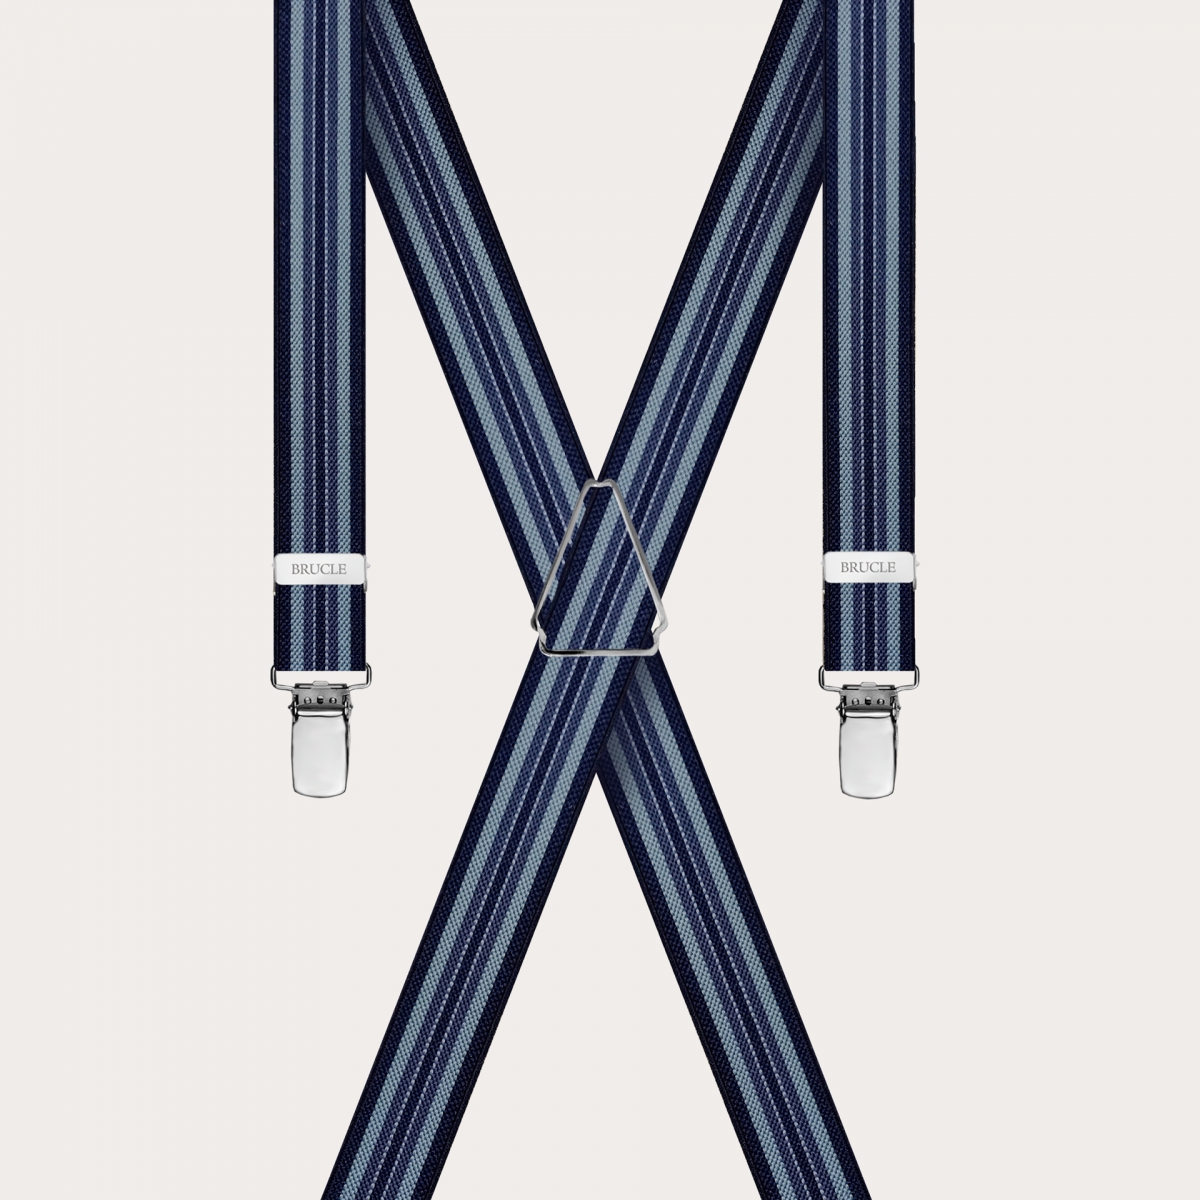 BRUCLE Striped elastic X-shaped braces, blue and light blue tones